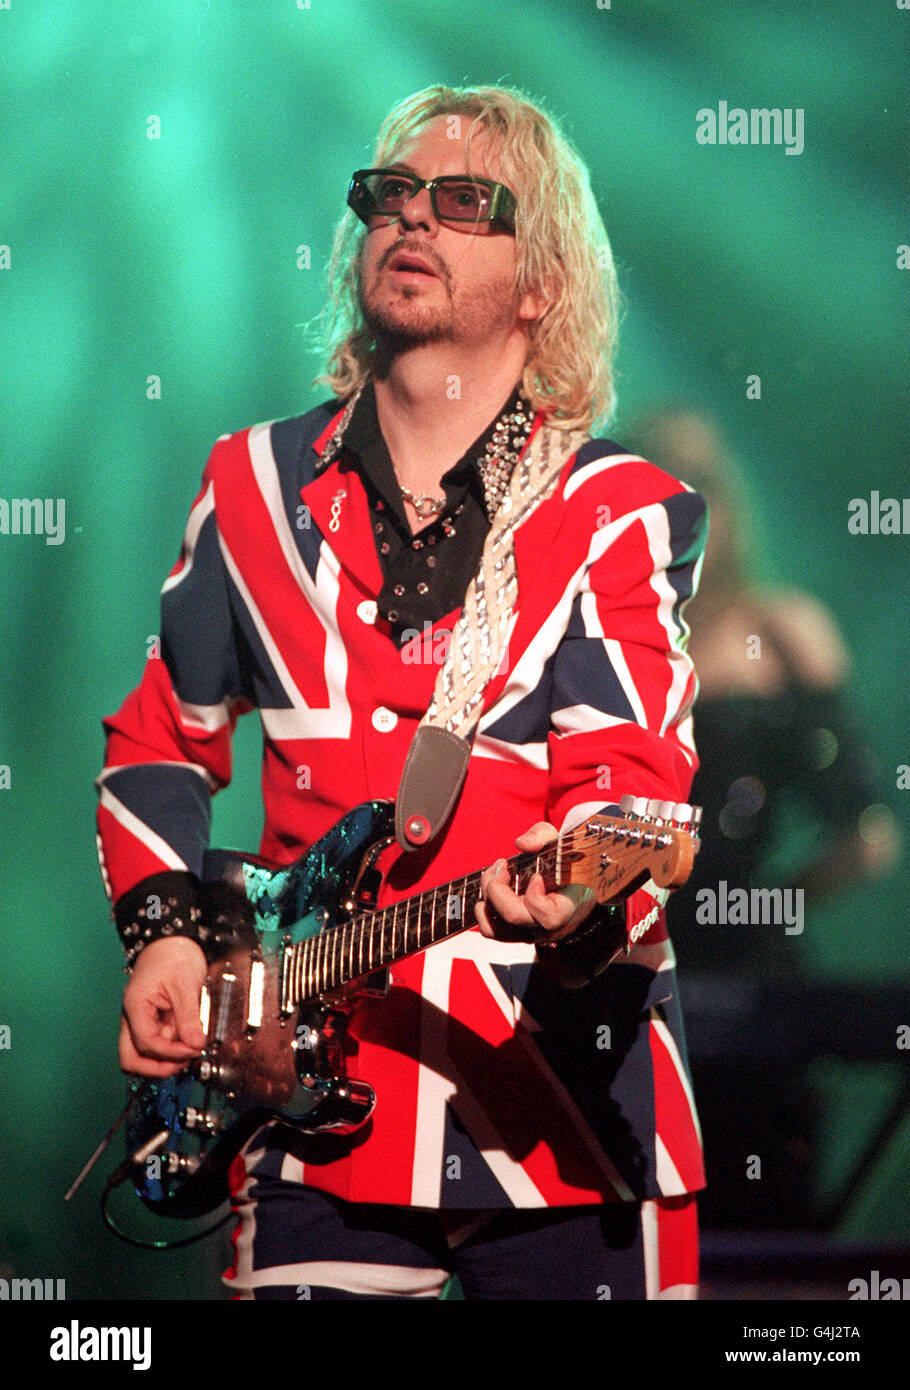 Download this stock image: British Rock singer Dave Stewart with